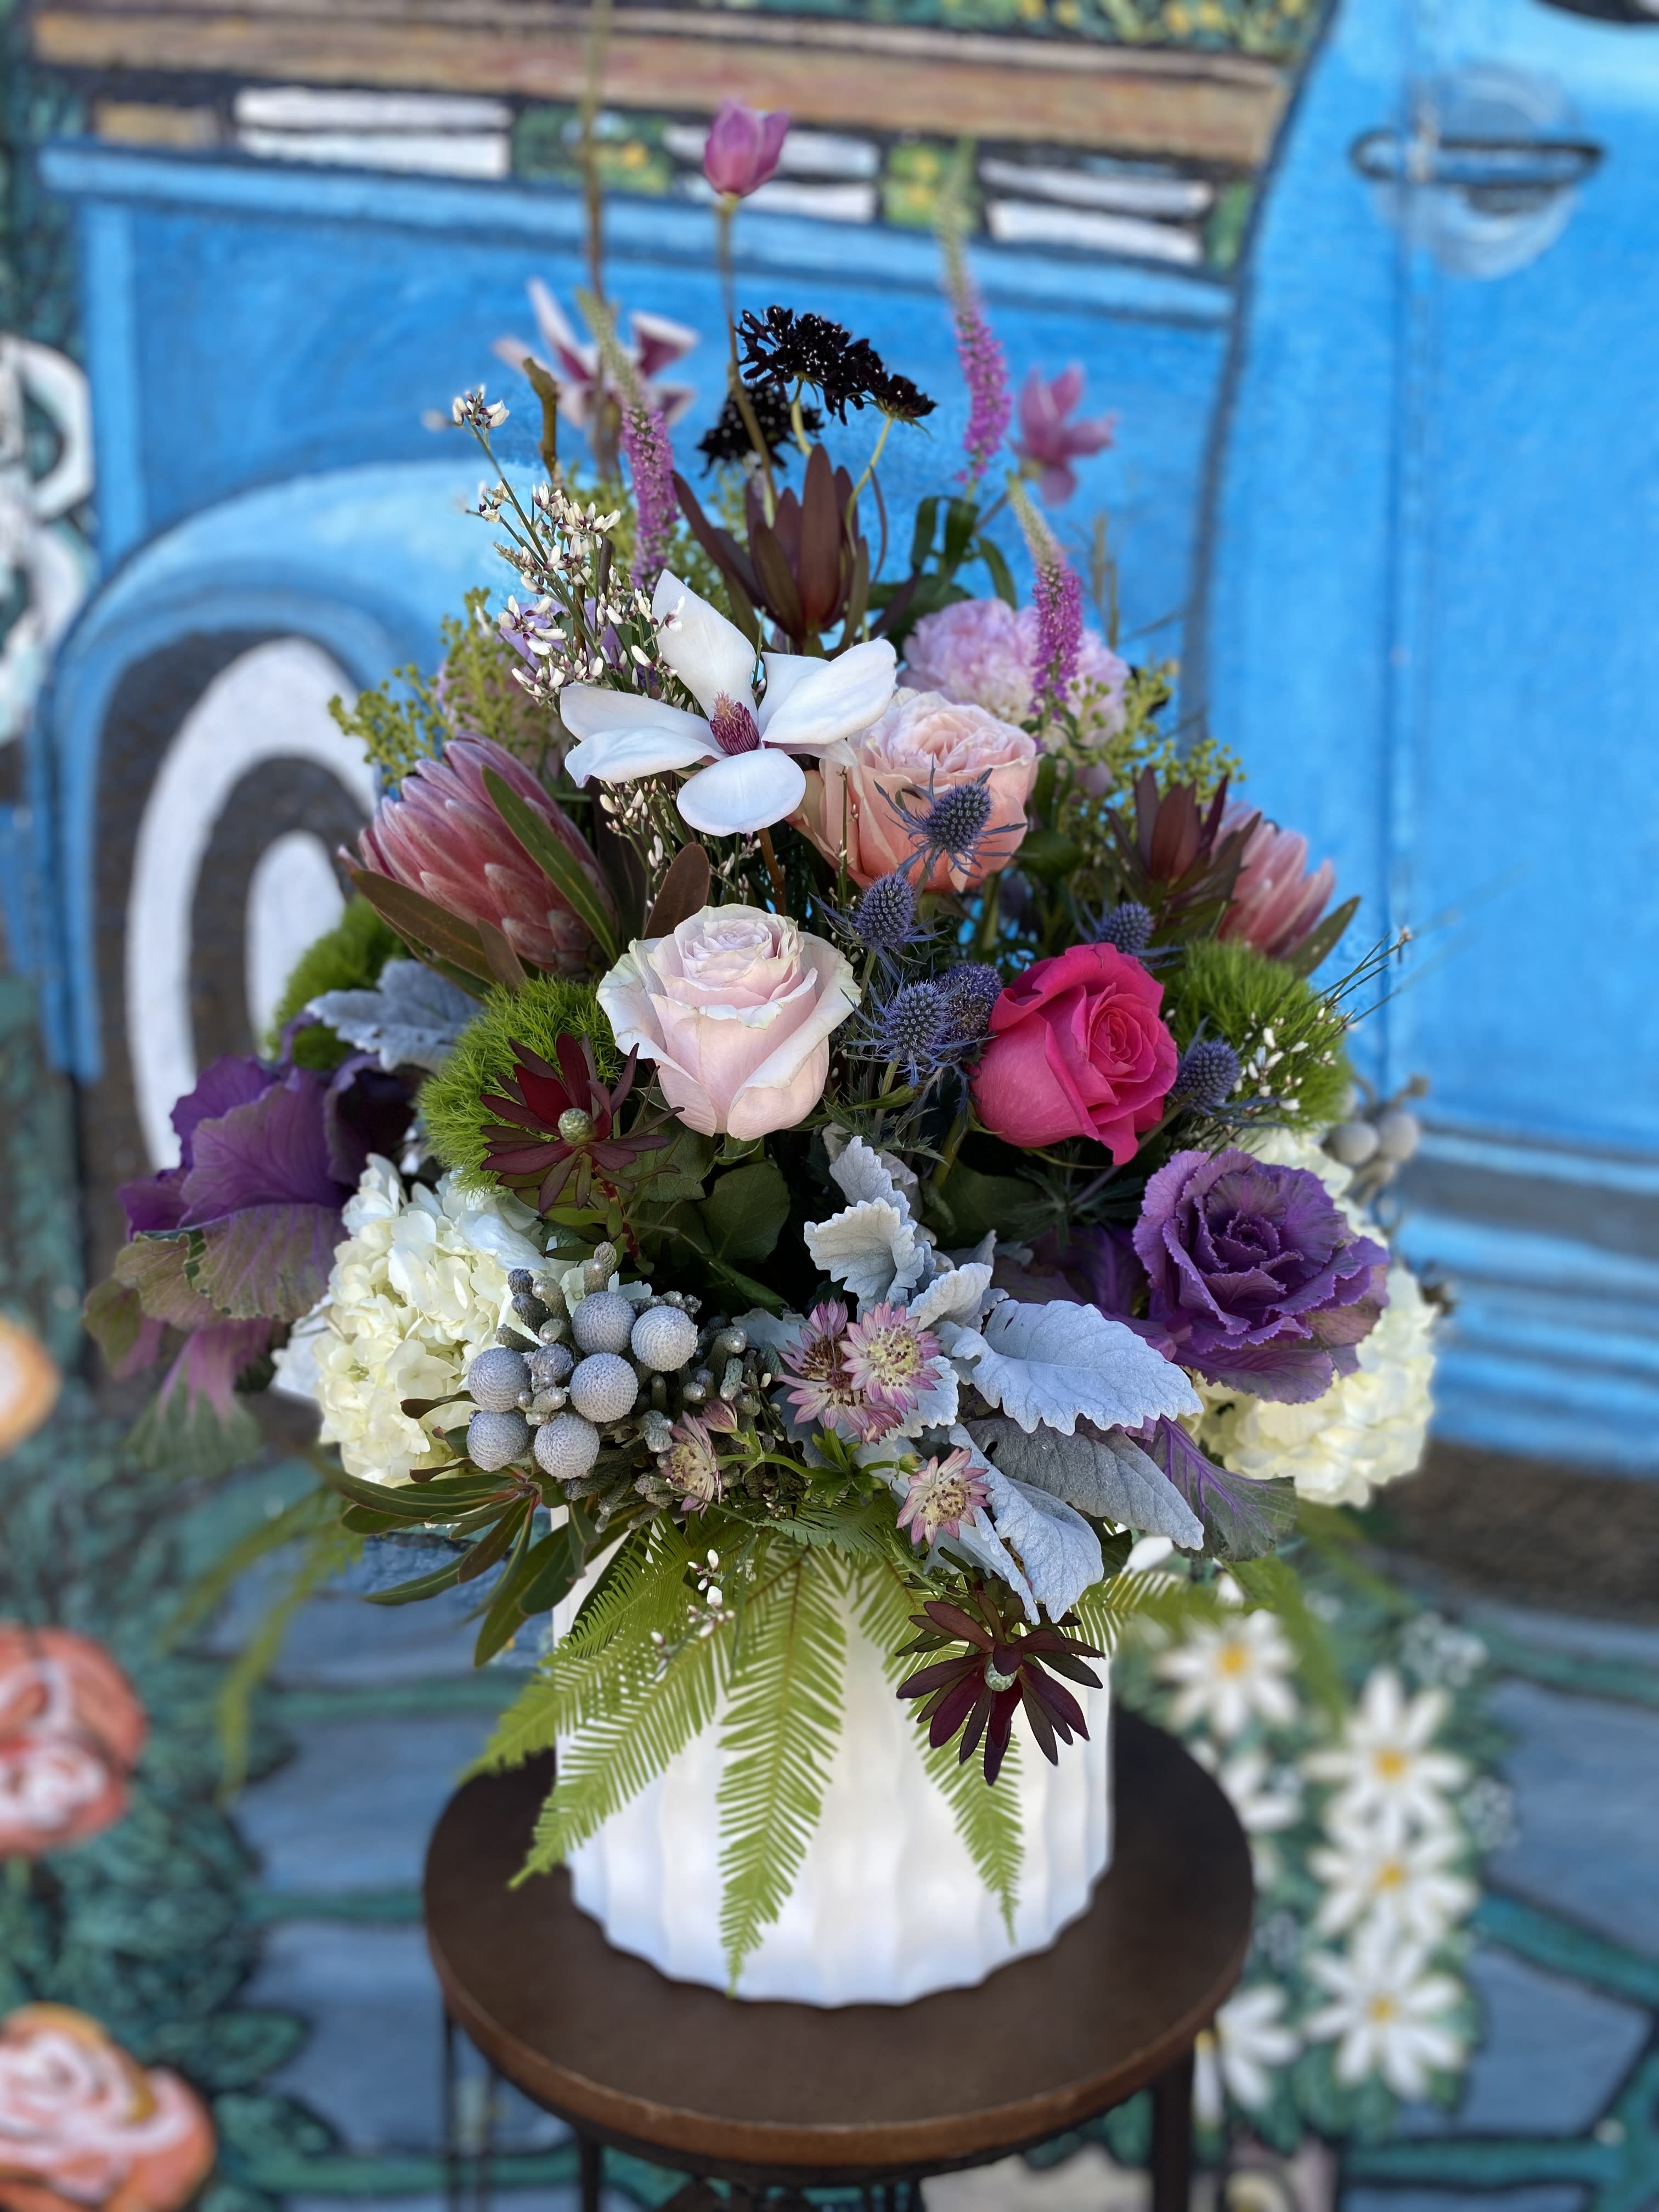 Garden Love - Mixed flowers arranged in a vase. 